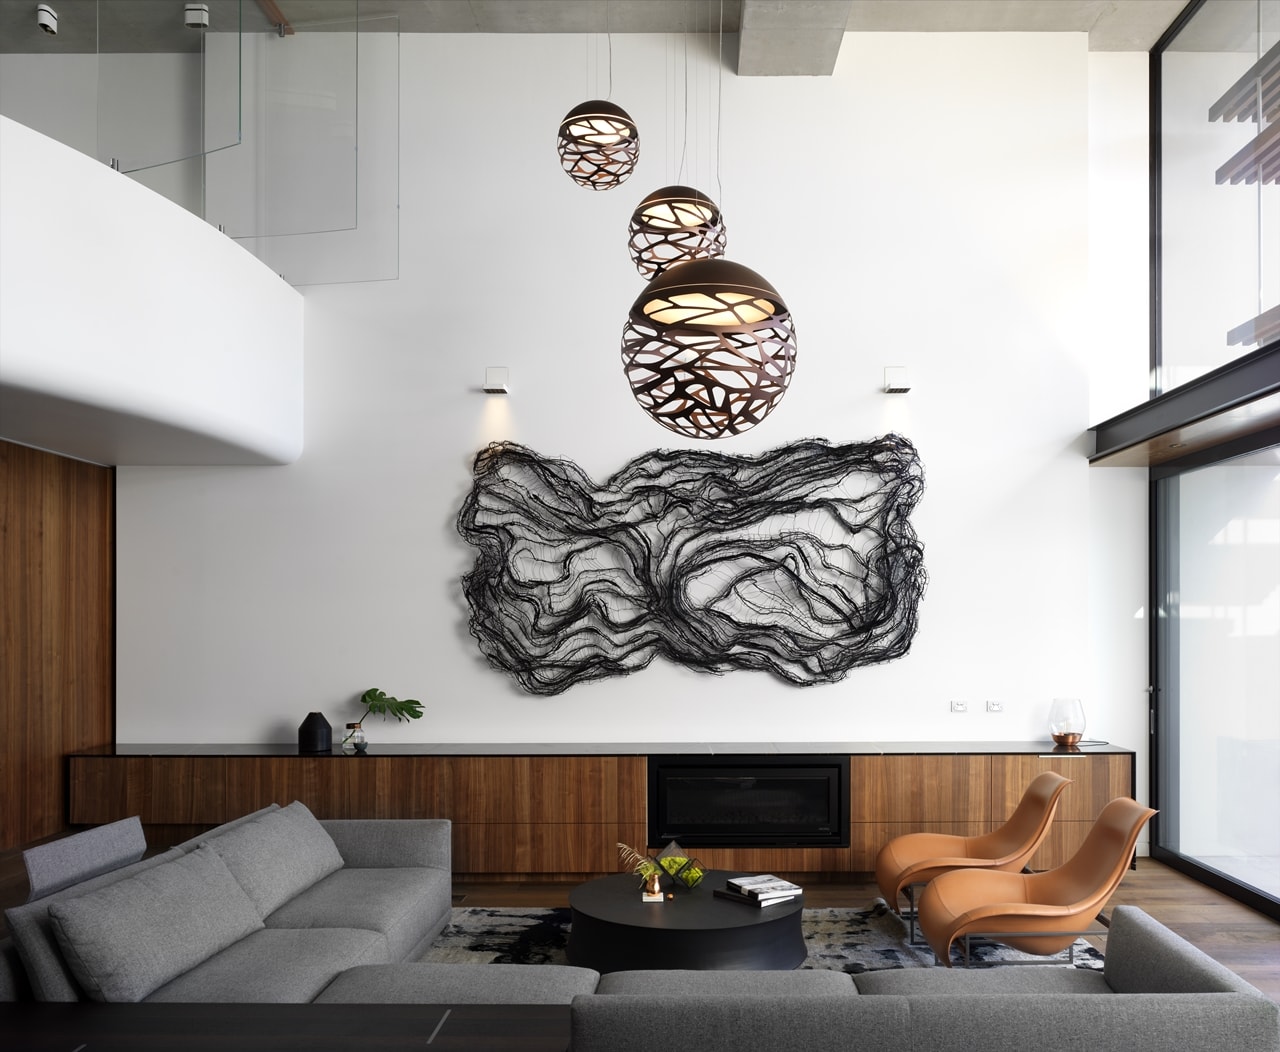 Double height living room wall design in a hillside house designed by Rolf Ockert